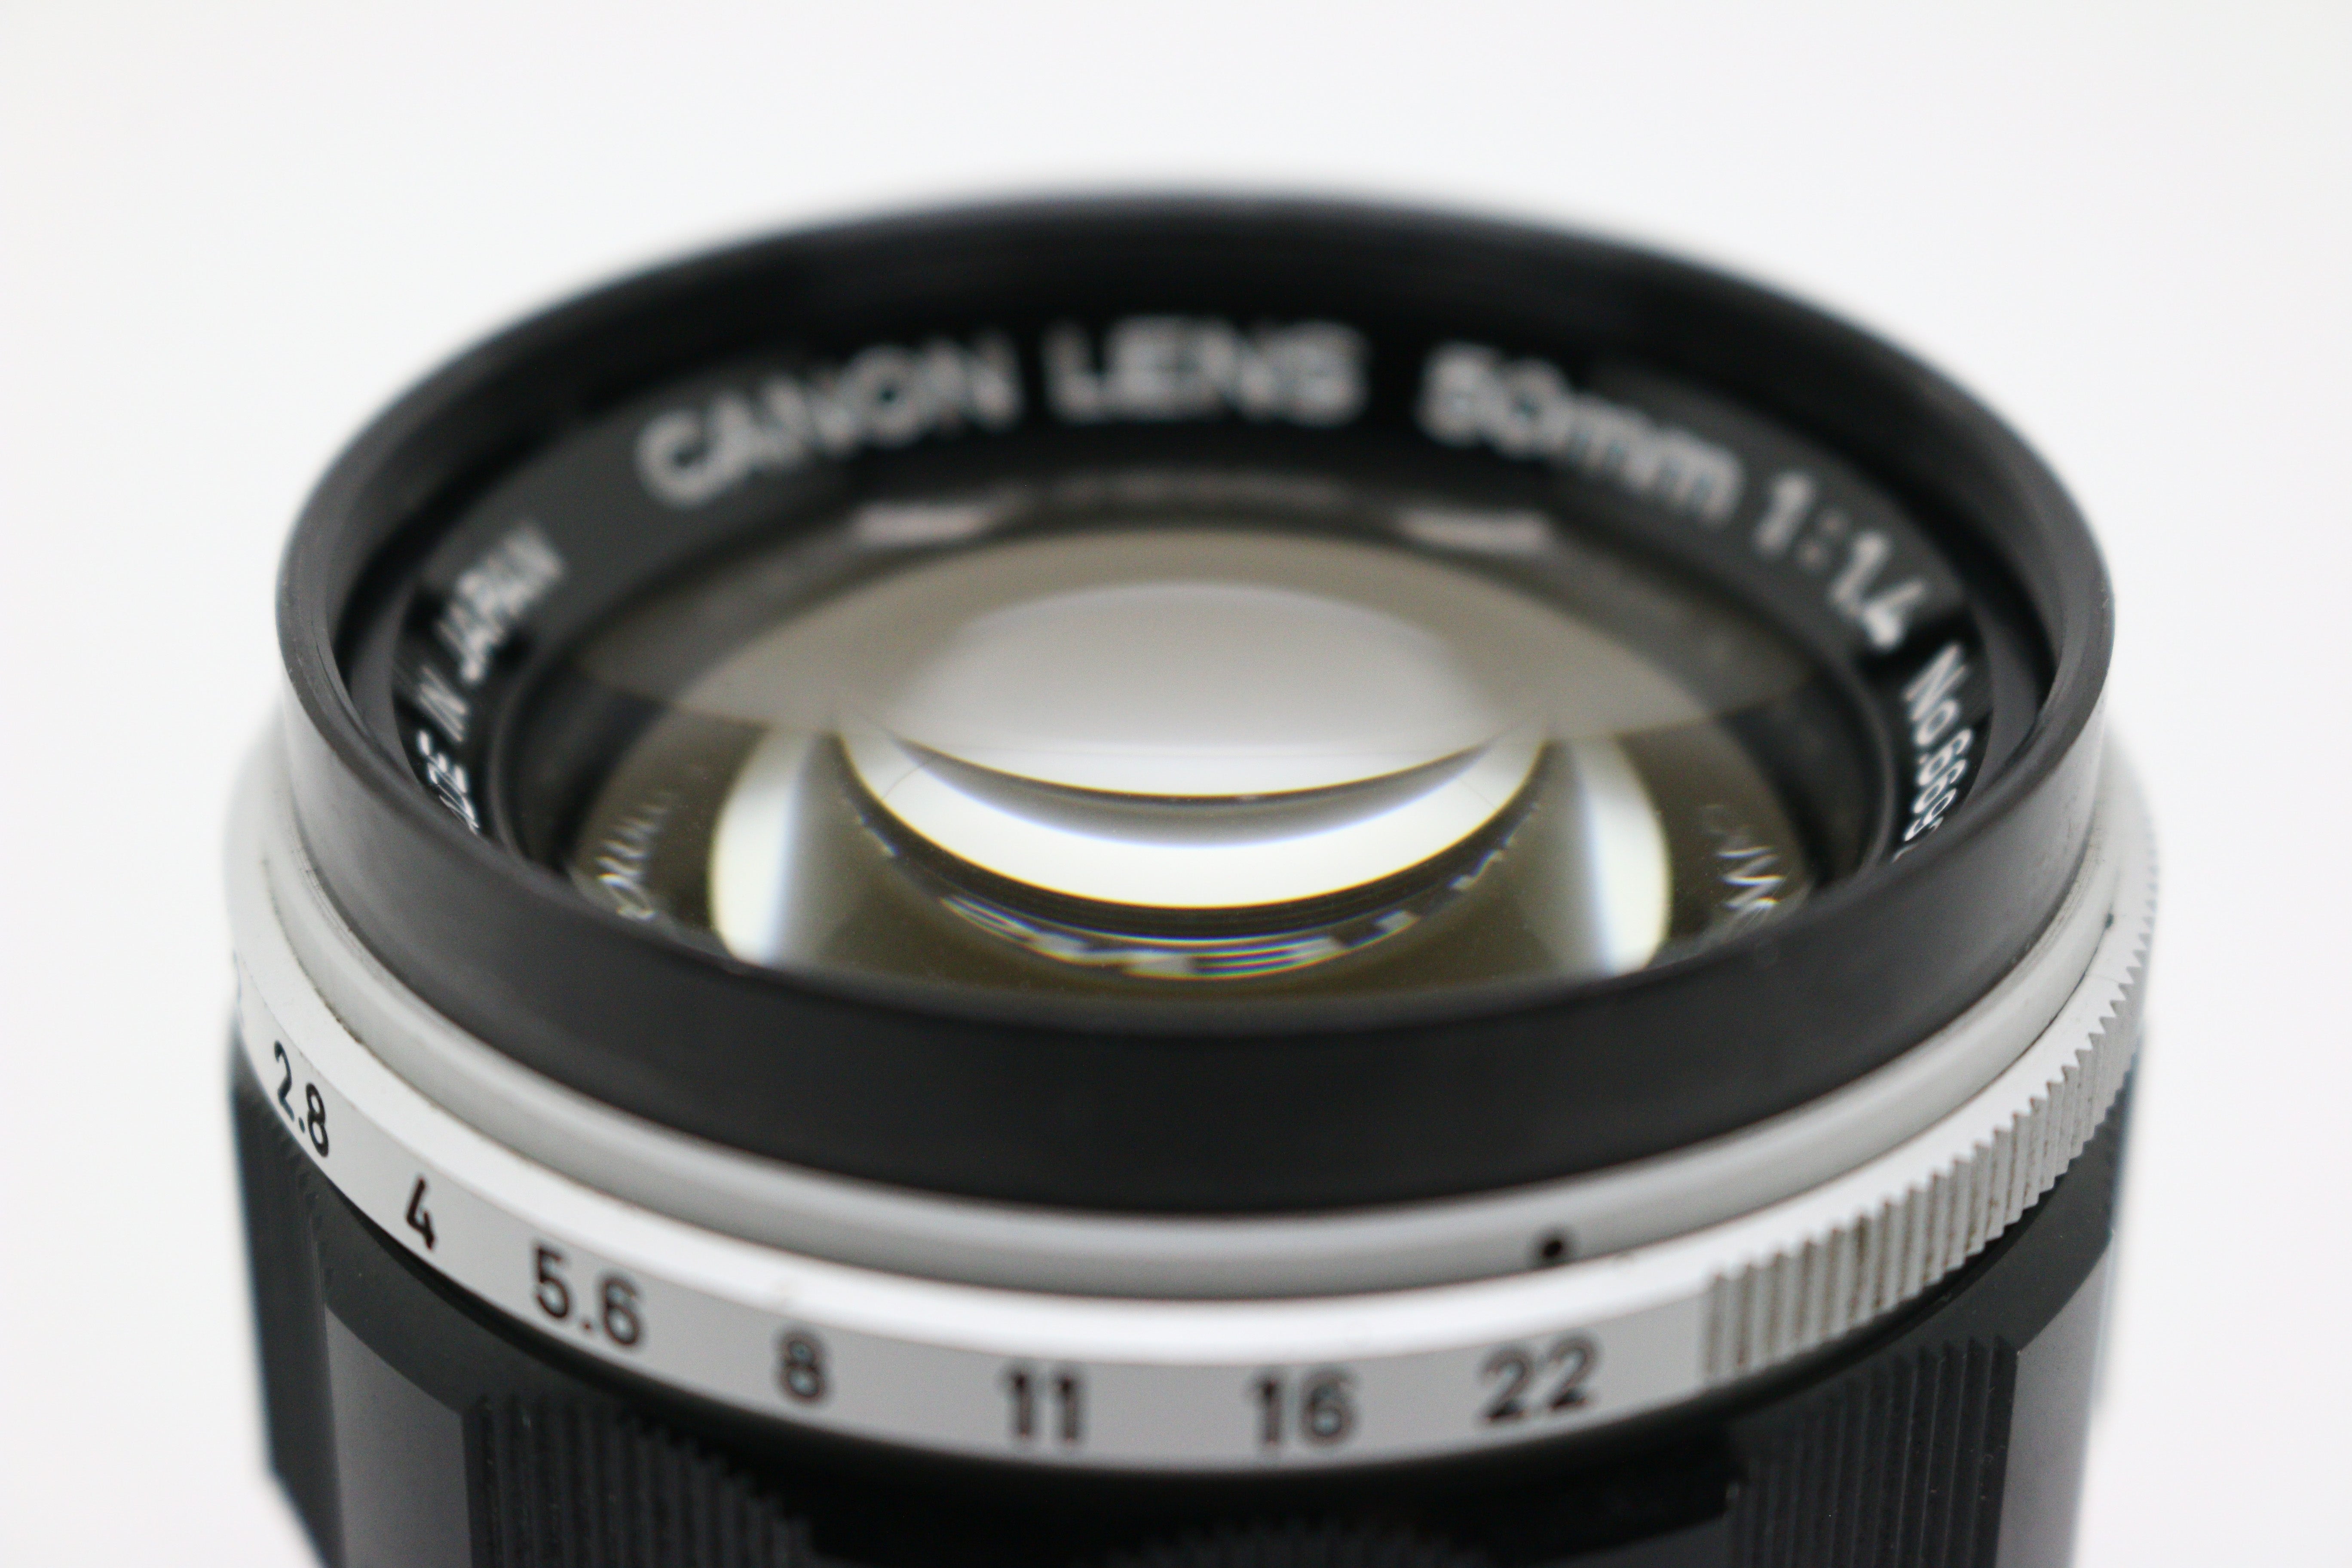 Canon 50mm 1.4 LTM w/ Leica M-Mount Adaptor